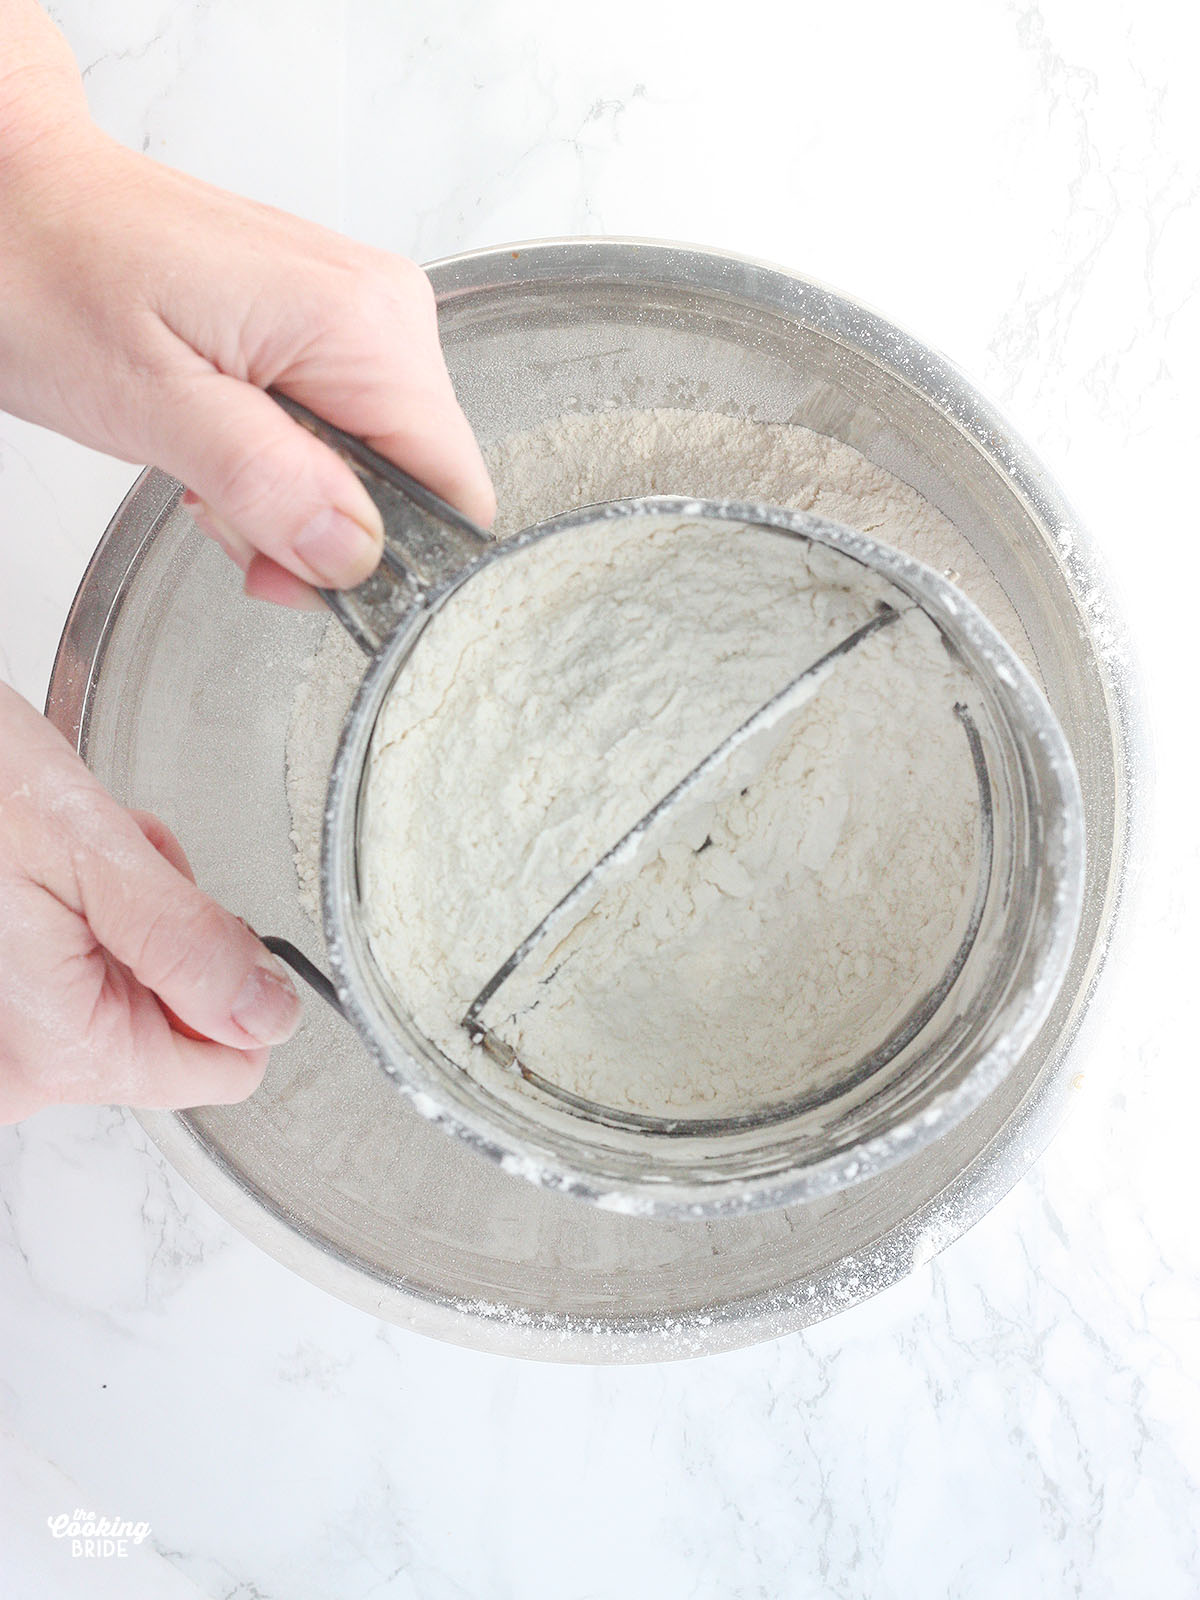 hands sifting flour, baking soda and salt into a metal mixing bowl